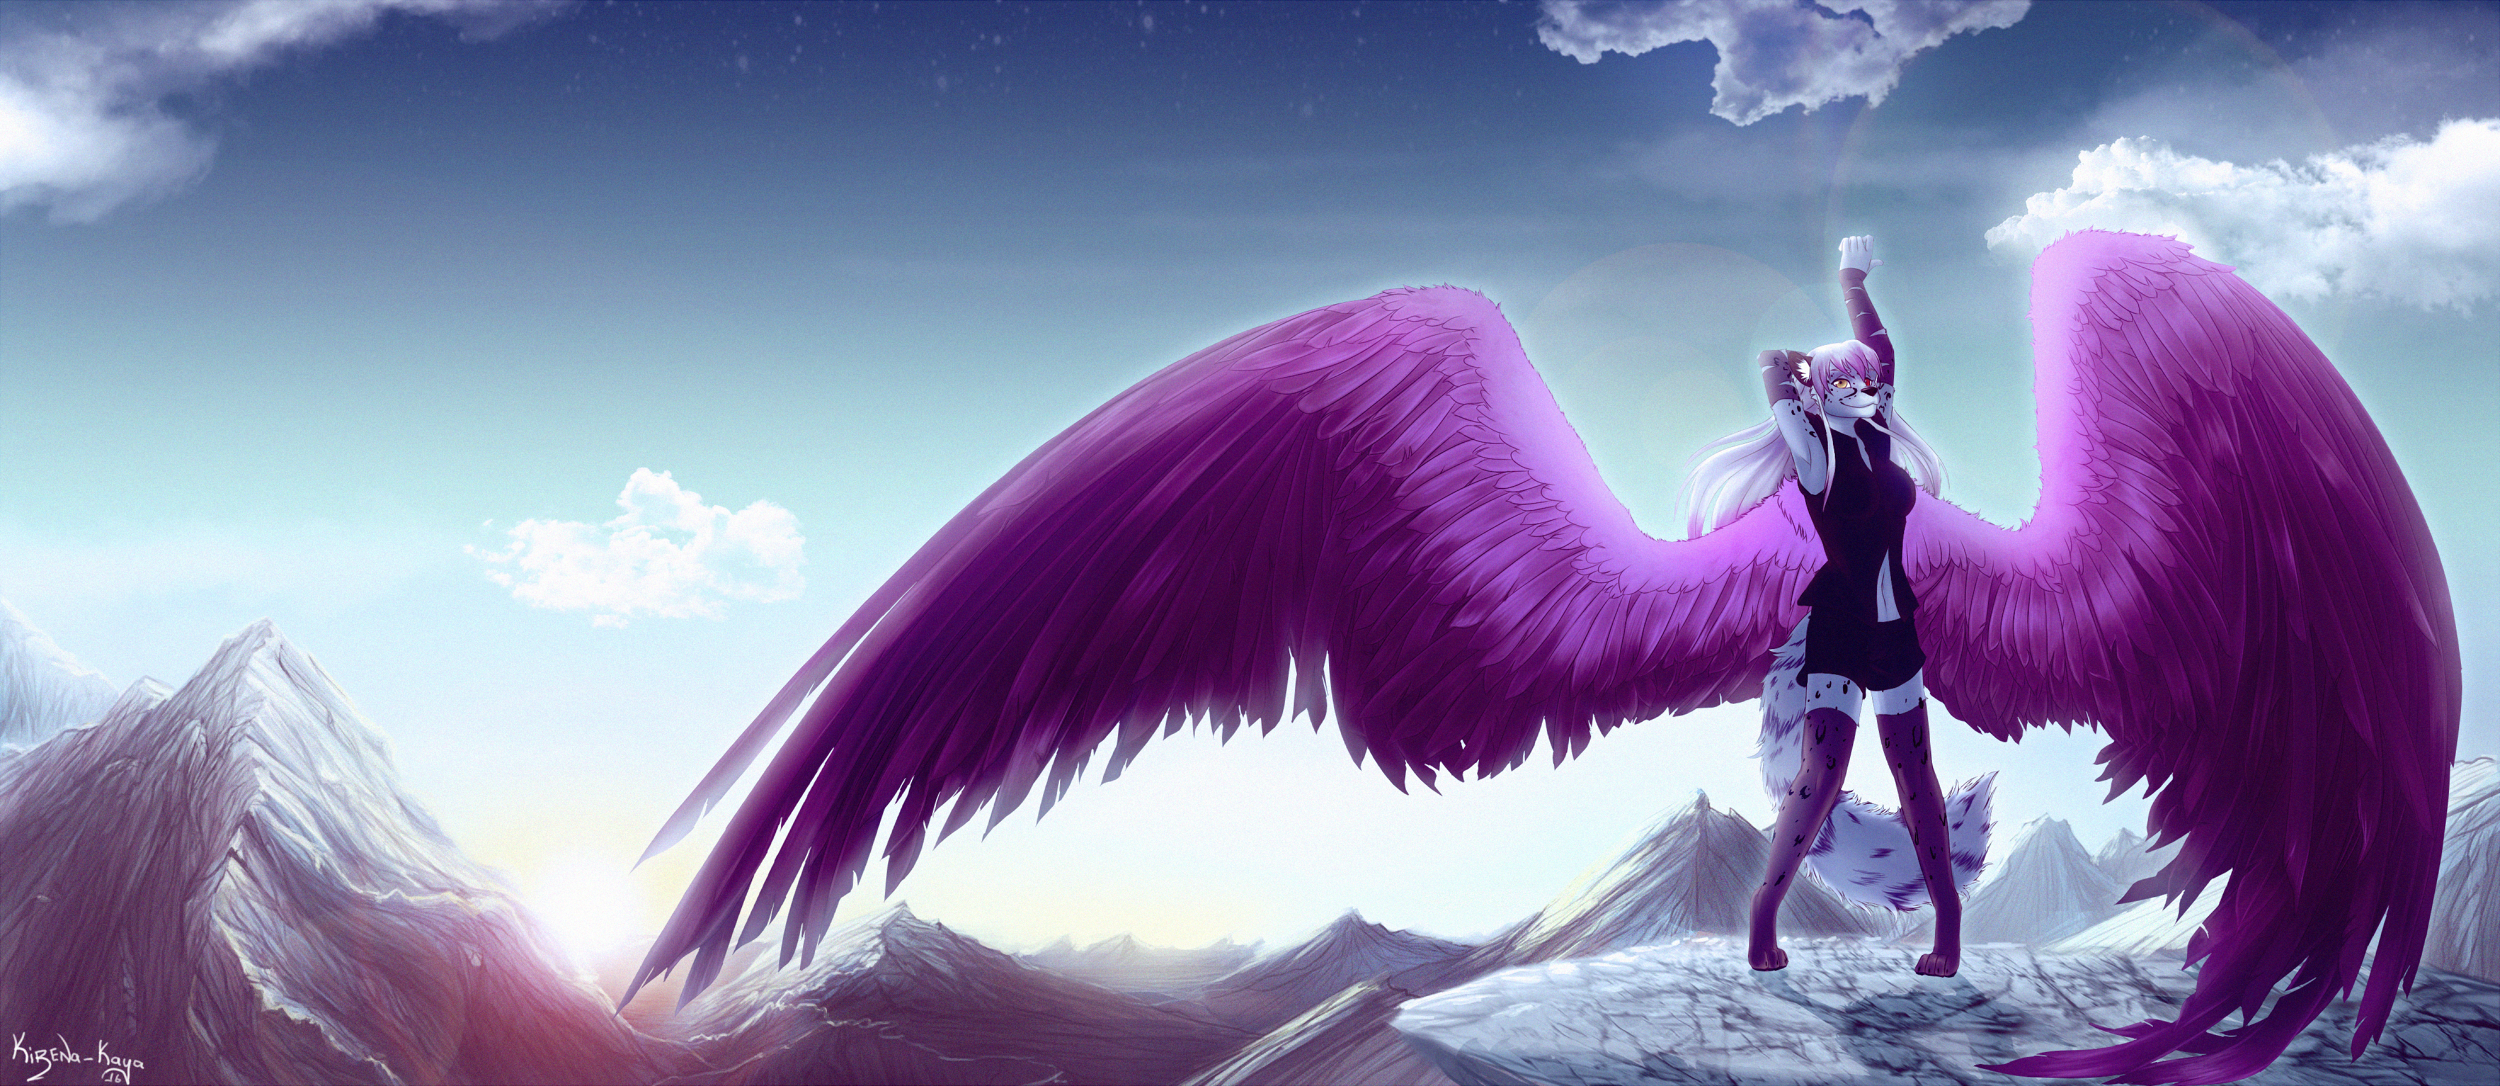 Fluffy angel. Симуран крылатый волк. Фурри с крыльями. Волк с крыльями. Ангел с фиолетовыми крыльями.